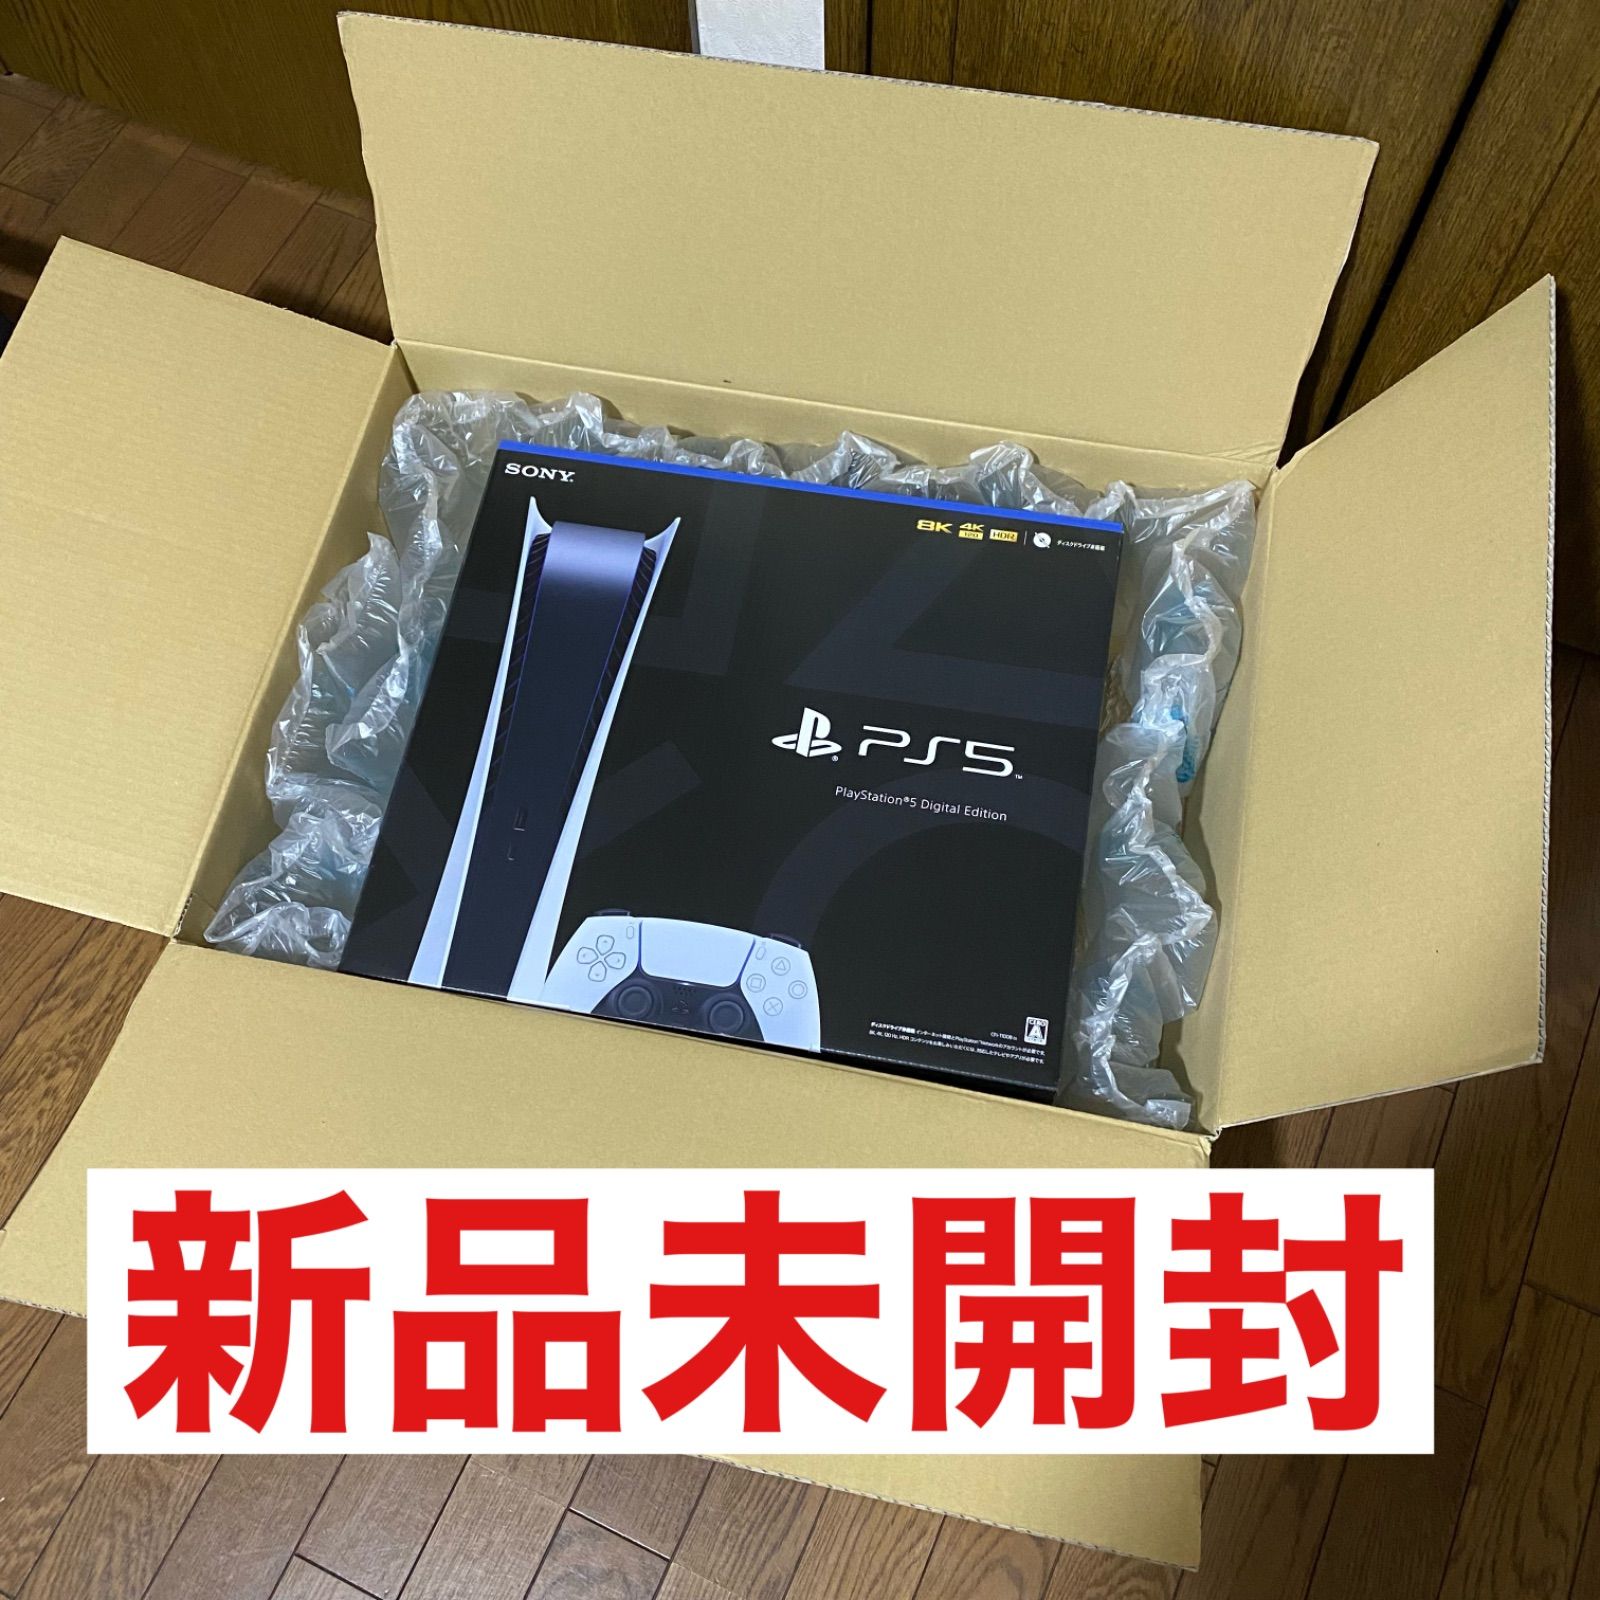 PS5 デジタルエディション 新品未開封 - HISAショップ - メルカリ